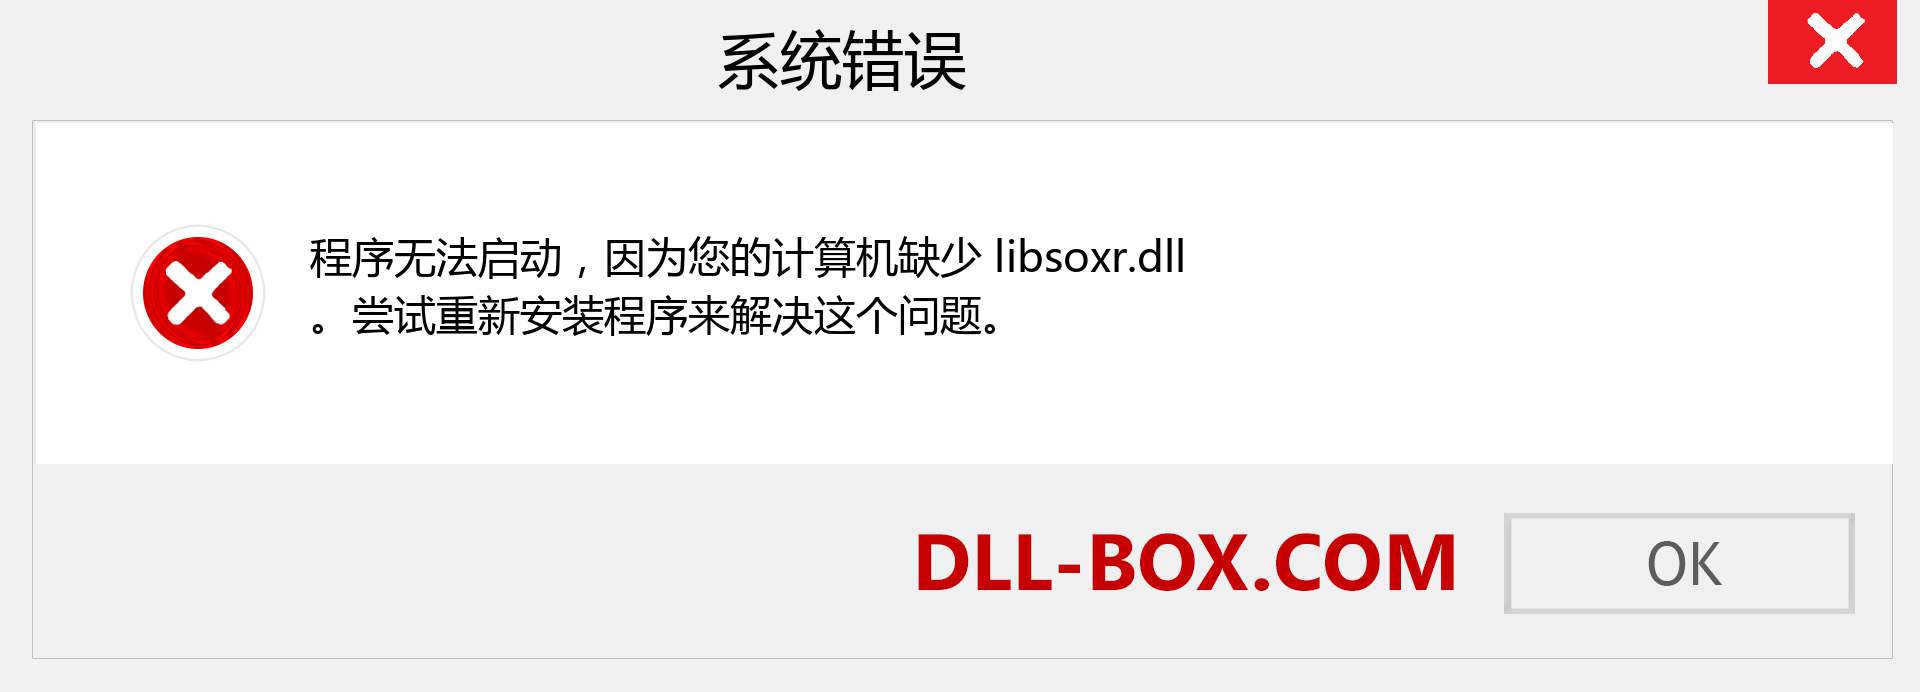 libsoxr.dll 文件丢失？。 适用于 Windows 7、8、10 的下载 - 修复 Windows、照片、图像上的 libsoxr dll 丢失错误